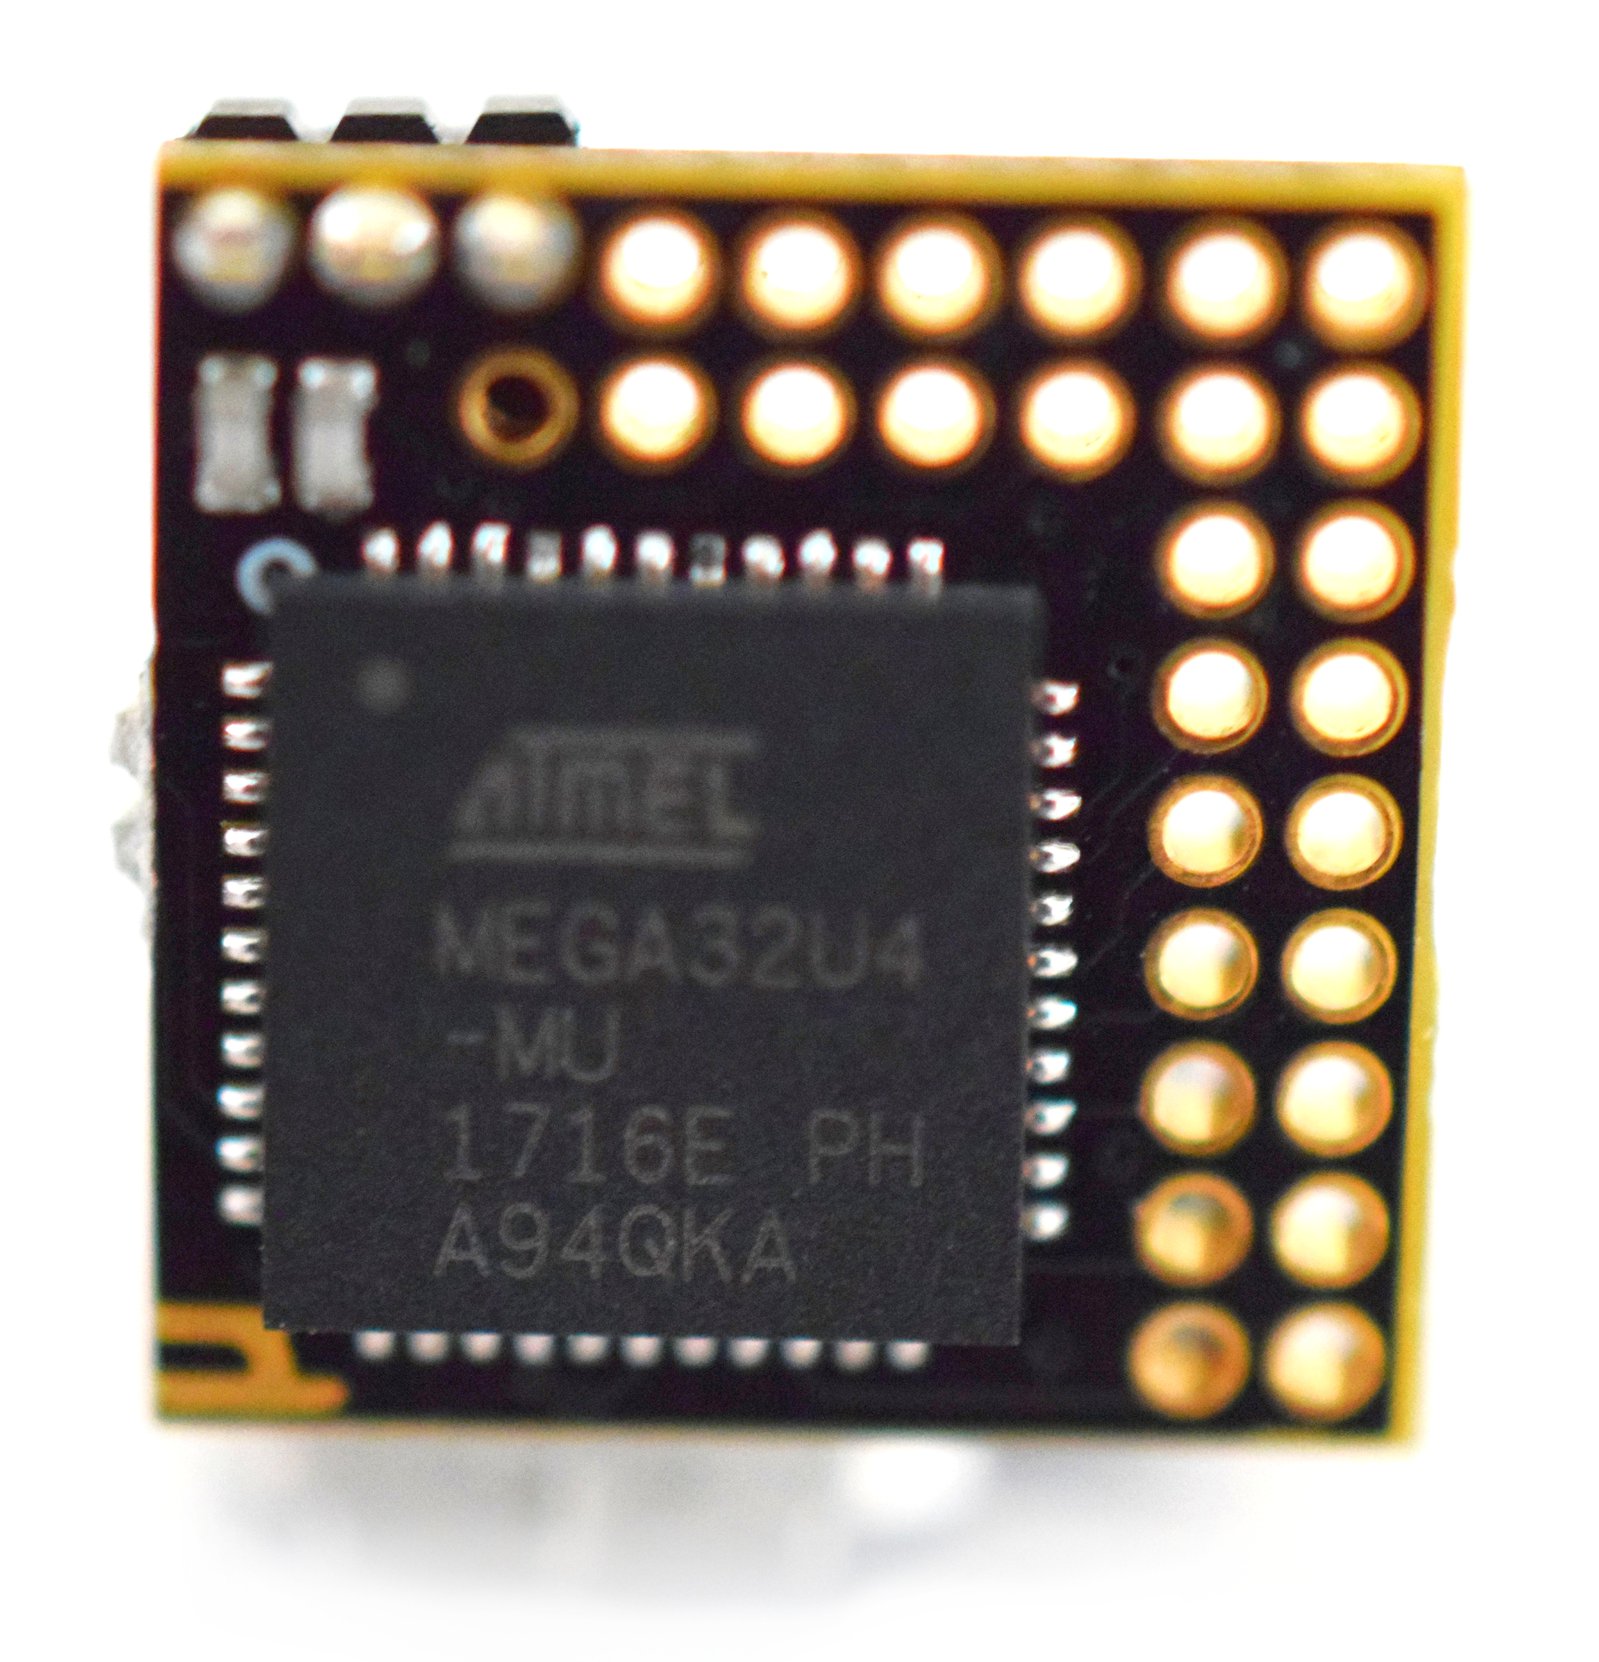 µduino uses the powerful and versatile ATMEGA32U4 microcontroller.